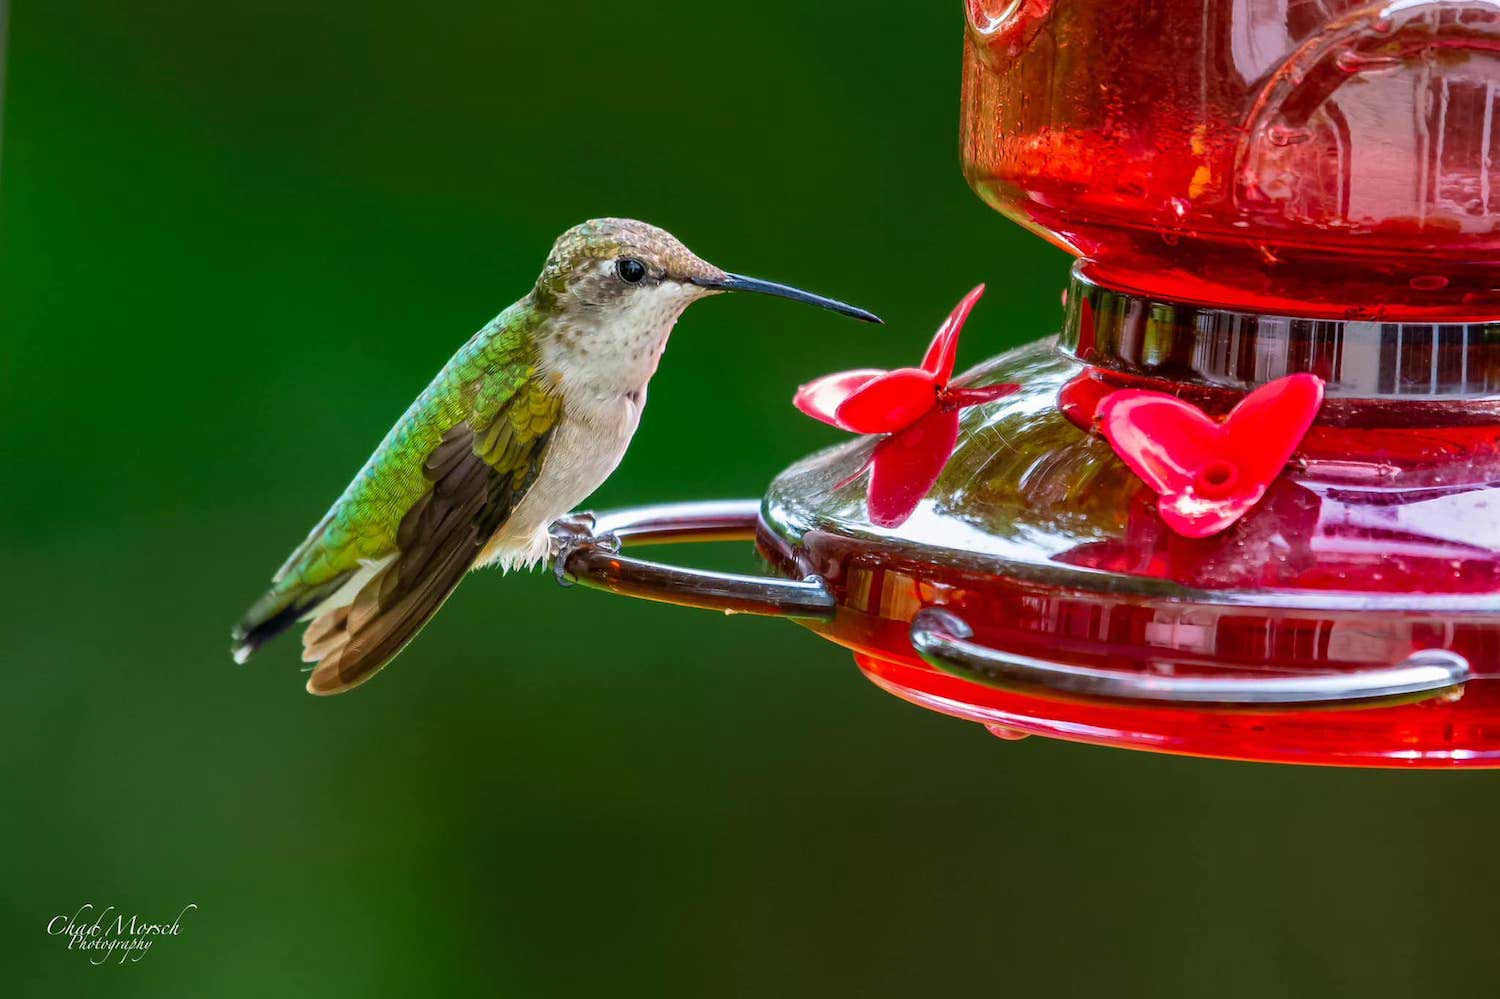 A ruby-throated hummingbird at a feeder.